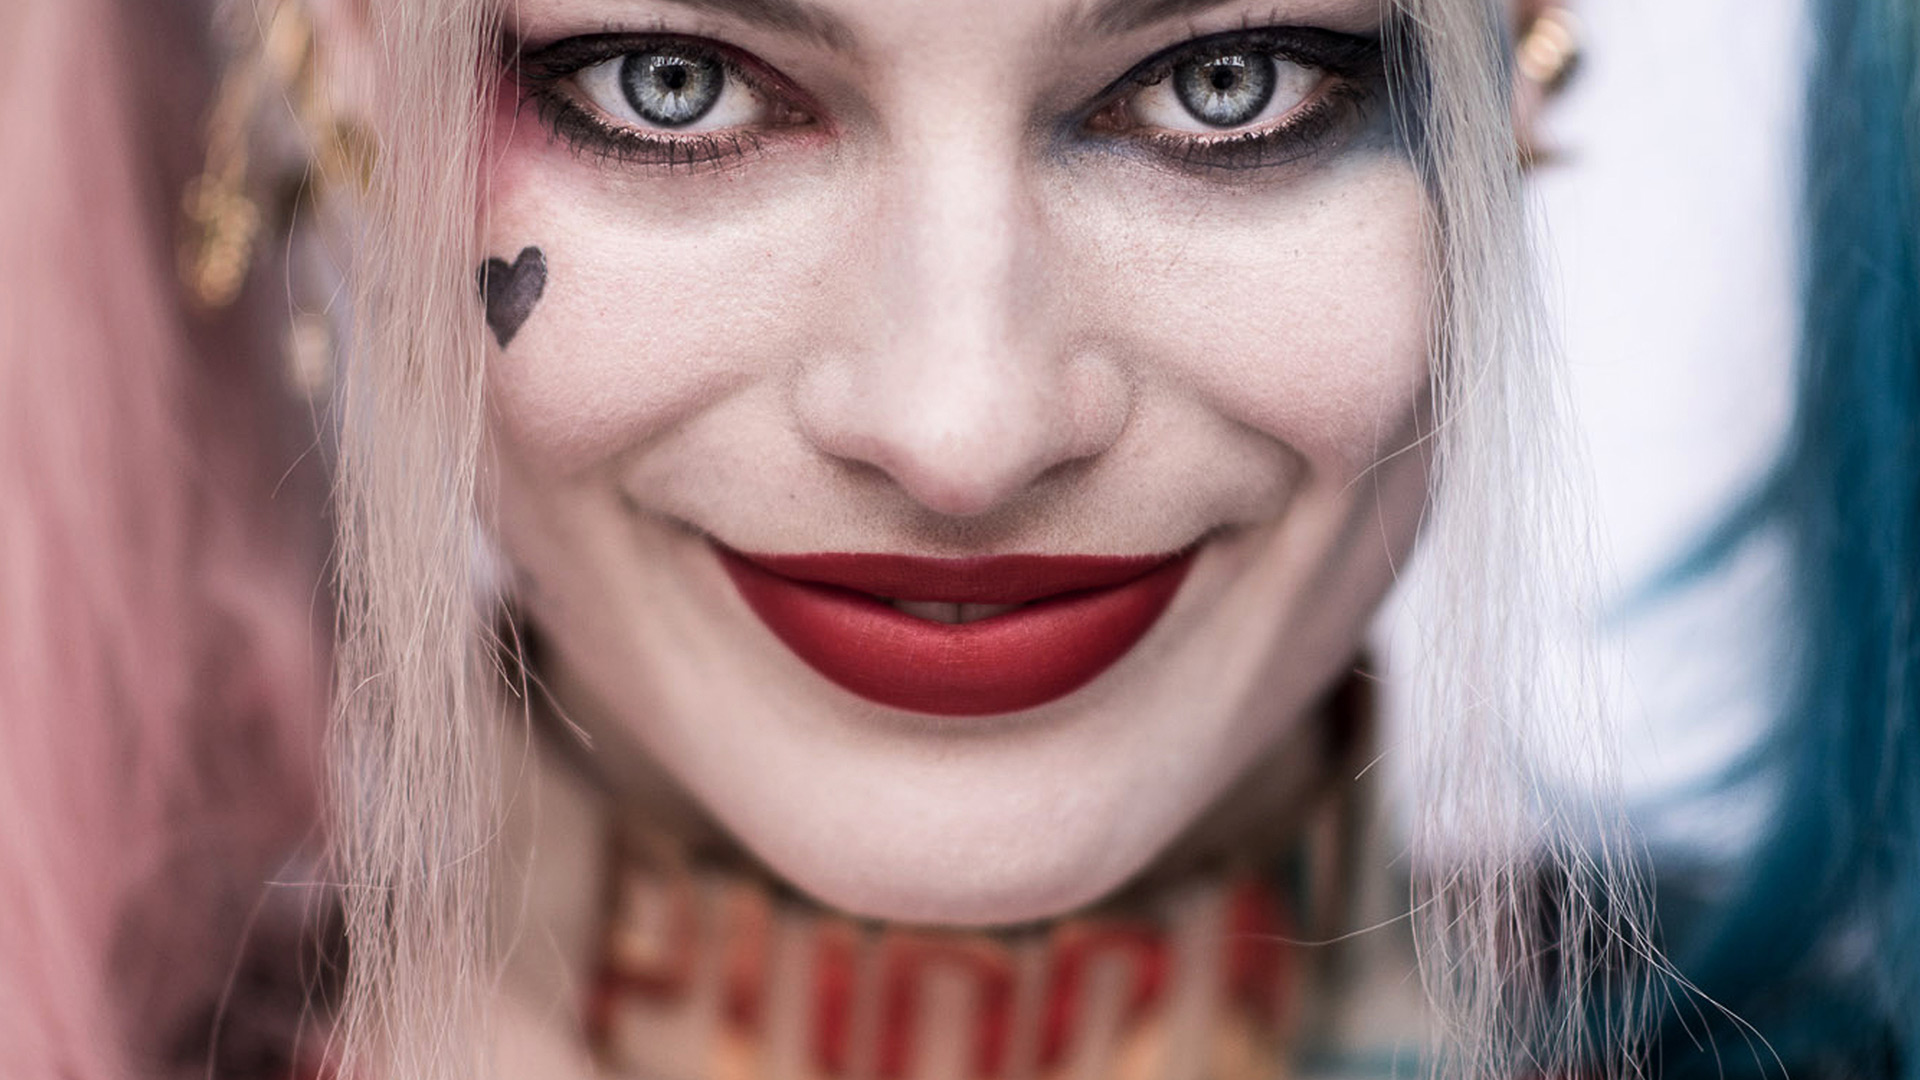 Classy Harley Quinn Halloween Makeup: 10 Easy Steps